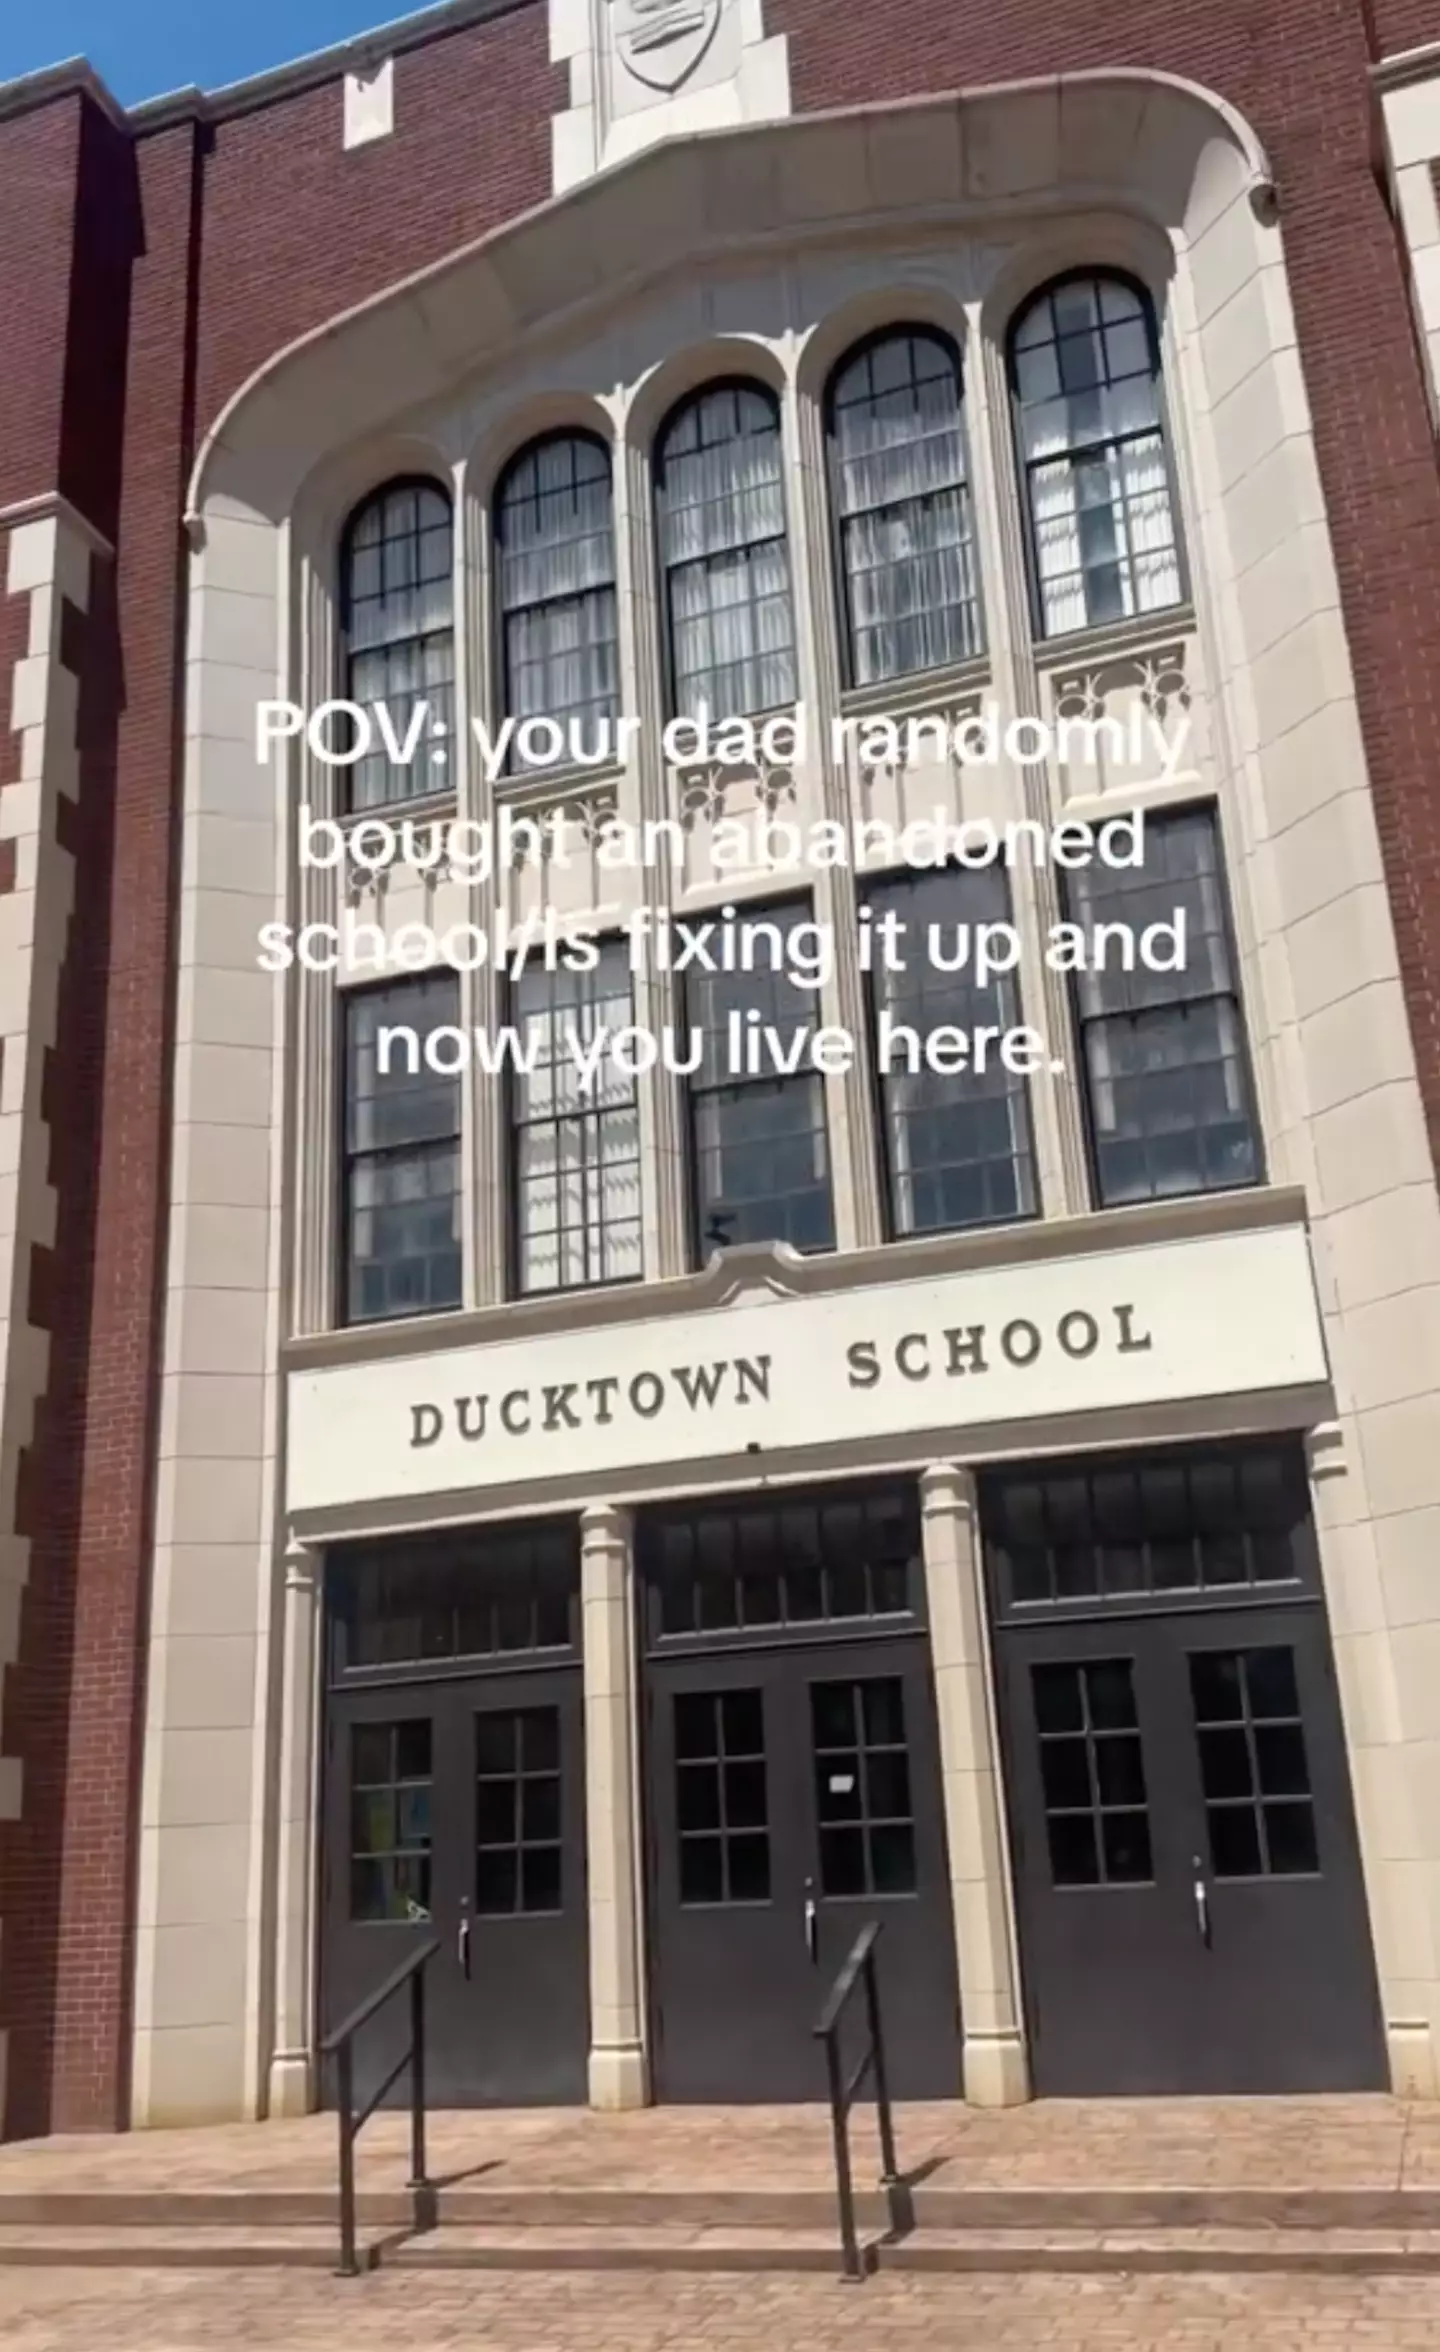 The abandoned school, Ducktown School, was bought by her dad Jason Collis in 2021. (TikTok/@sarahmcollis)